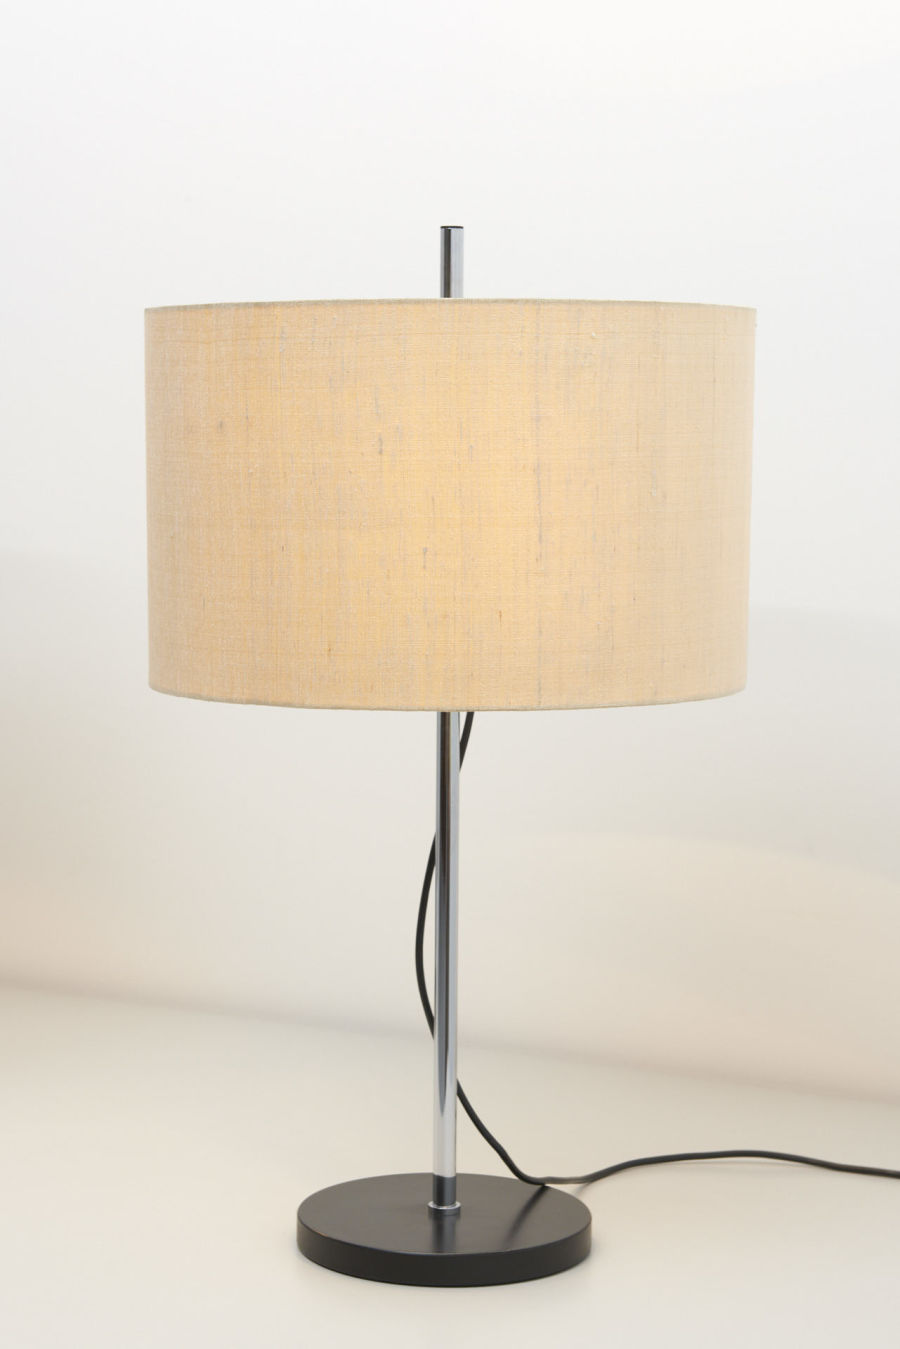 modestfurniture-vintage-2005-staff-table-lamp05